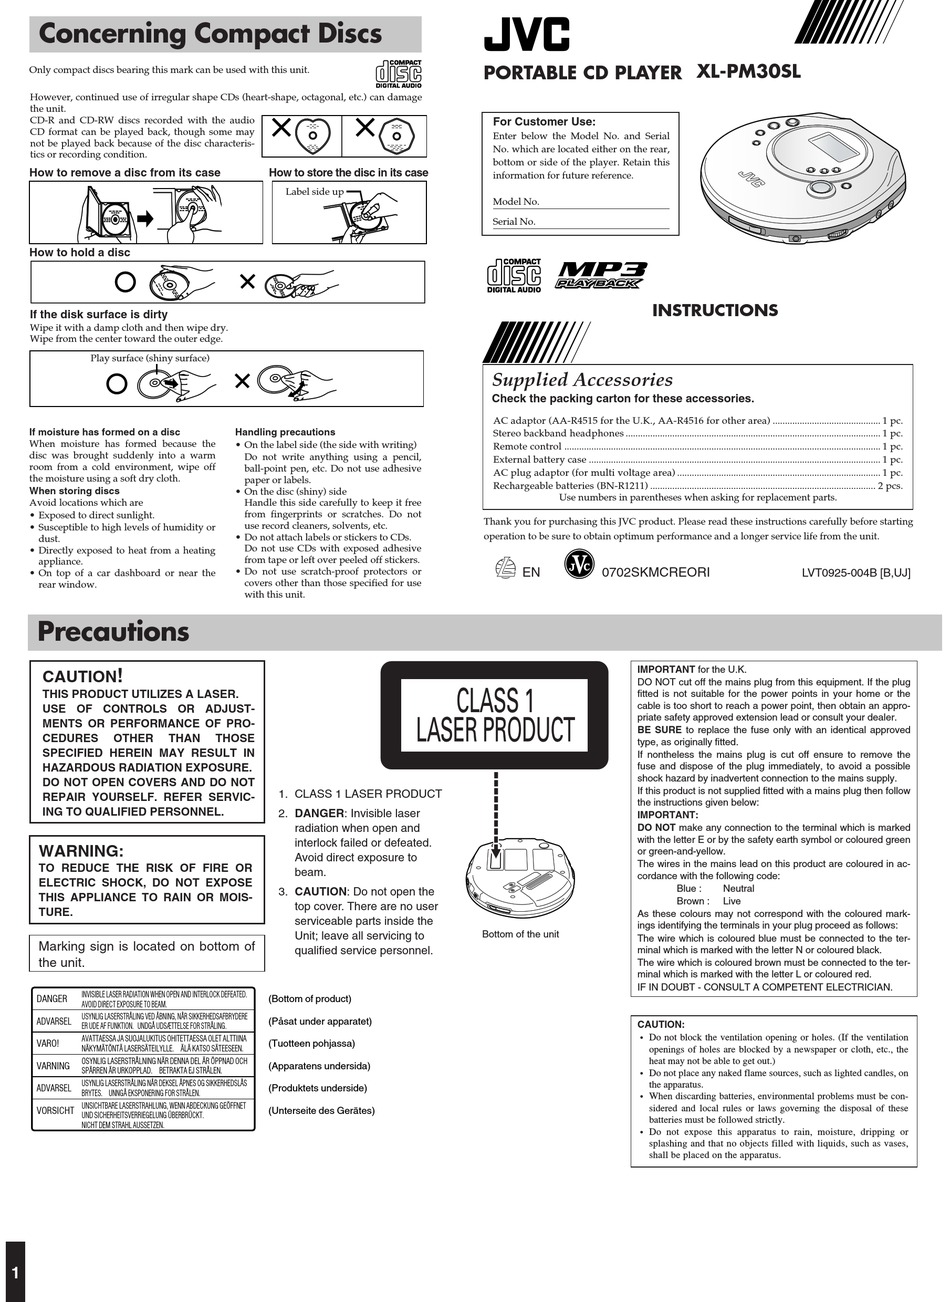 JVC XL-PM30 MANUAL Pdf Download | ManualsLib